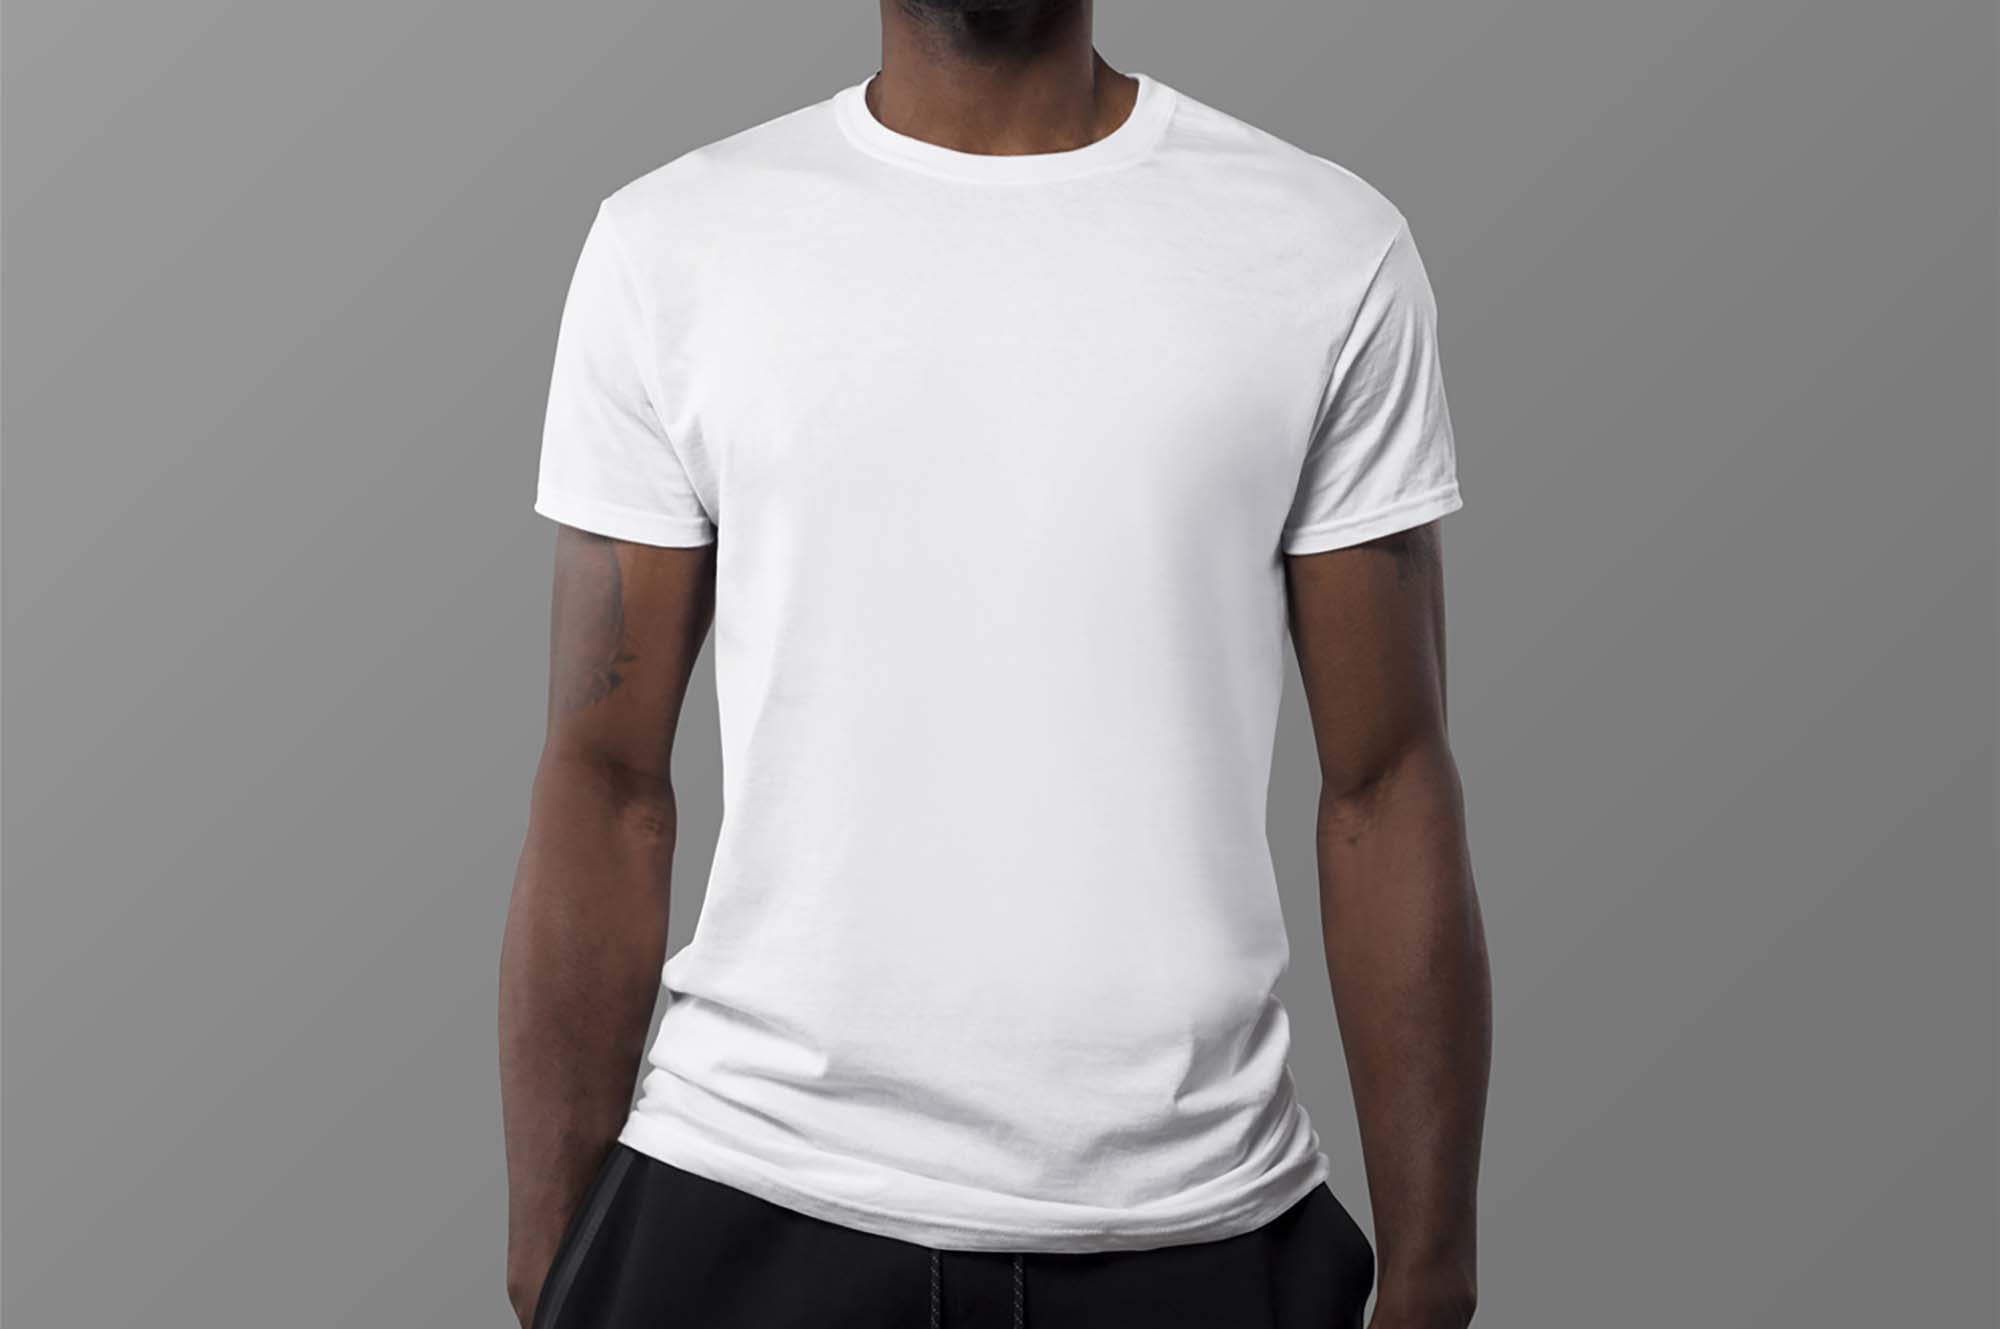 Download Man T-Shirt White PSD Mockup (Free) by Mr. Mockup